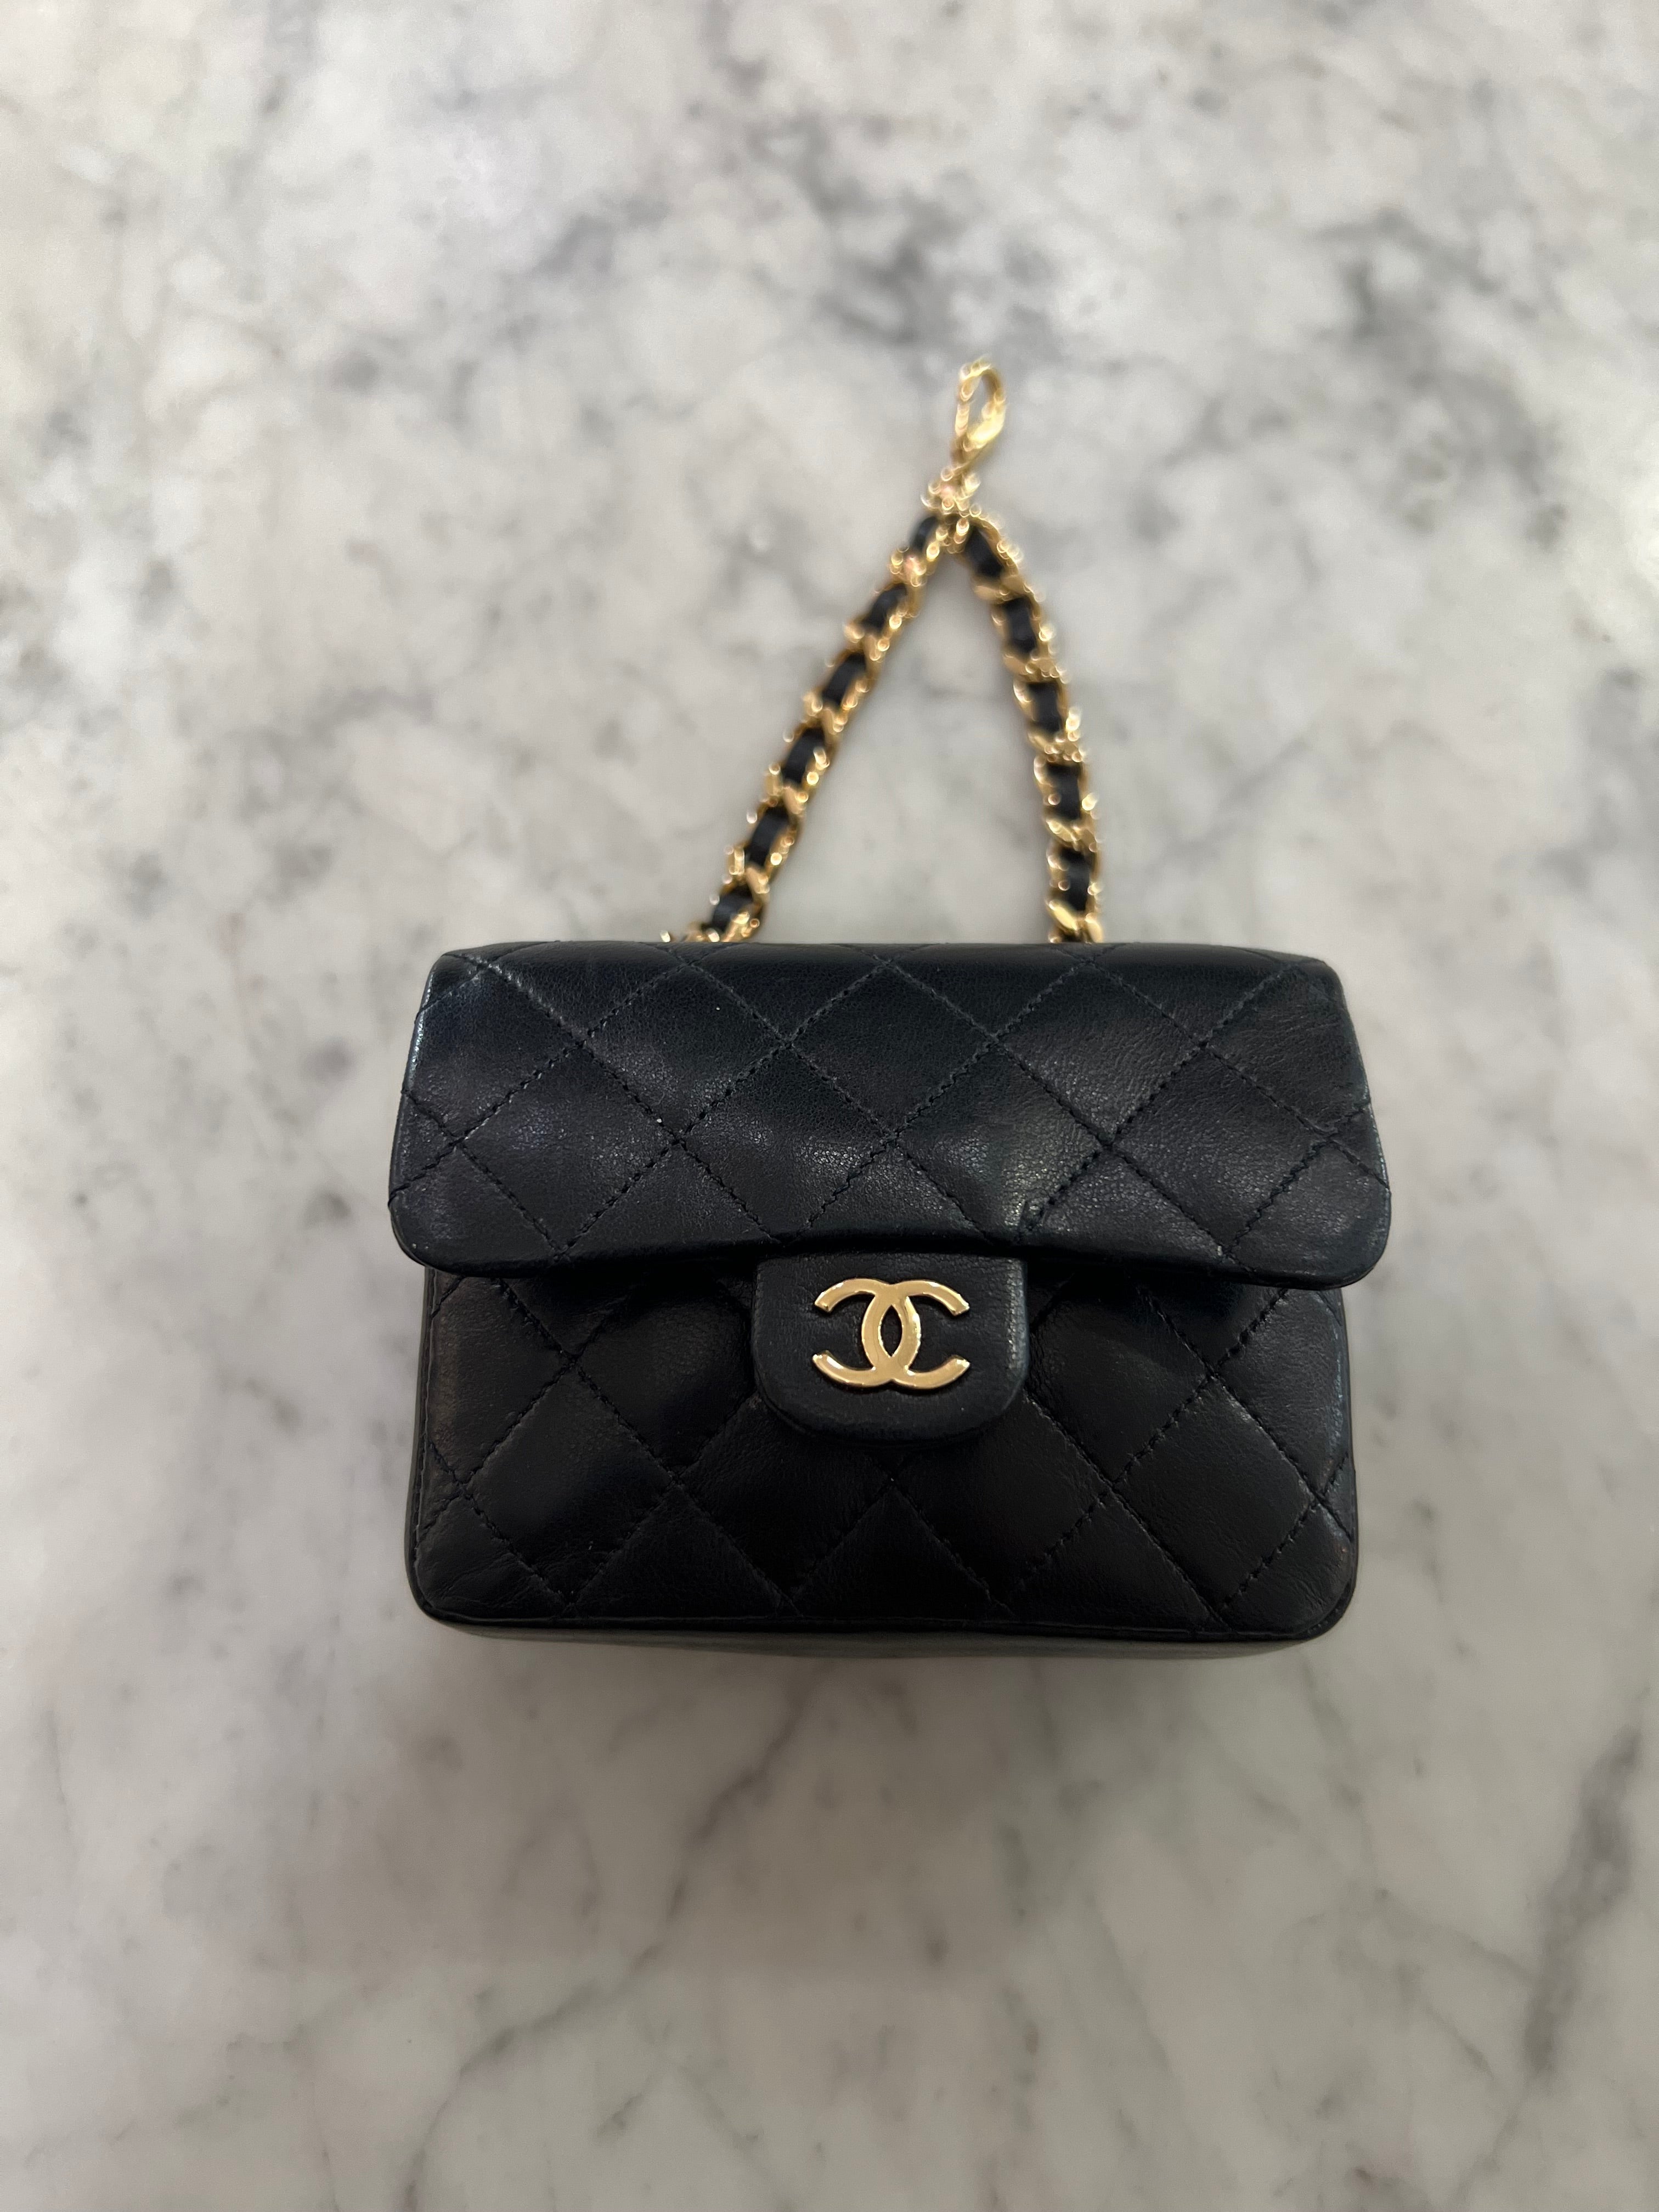 Chanel Mini Belt Bag Charm  City Girl Consignment